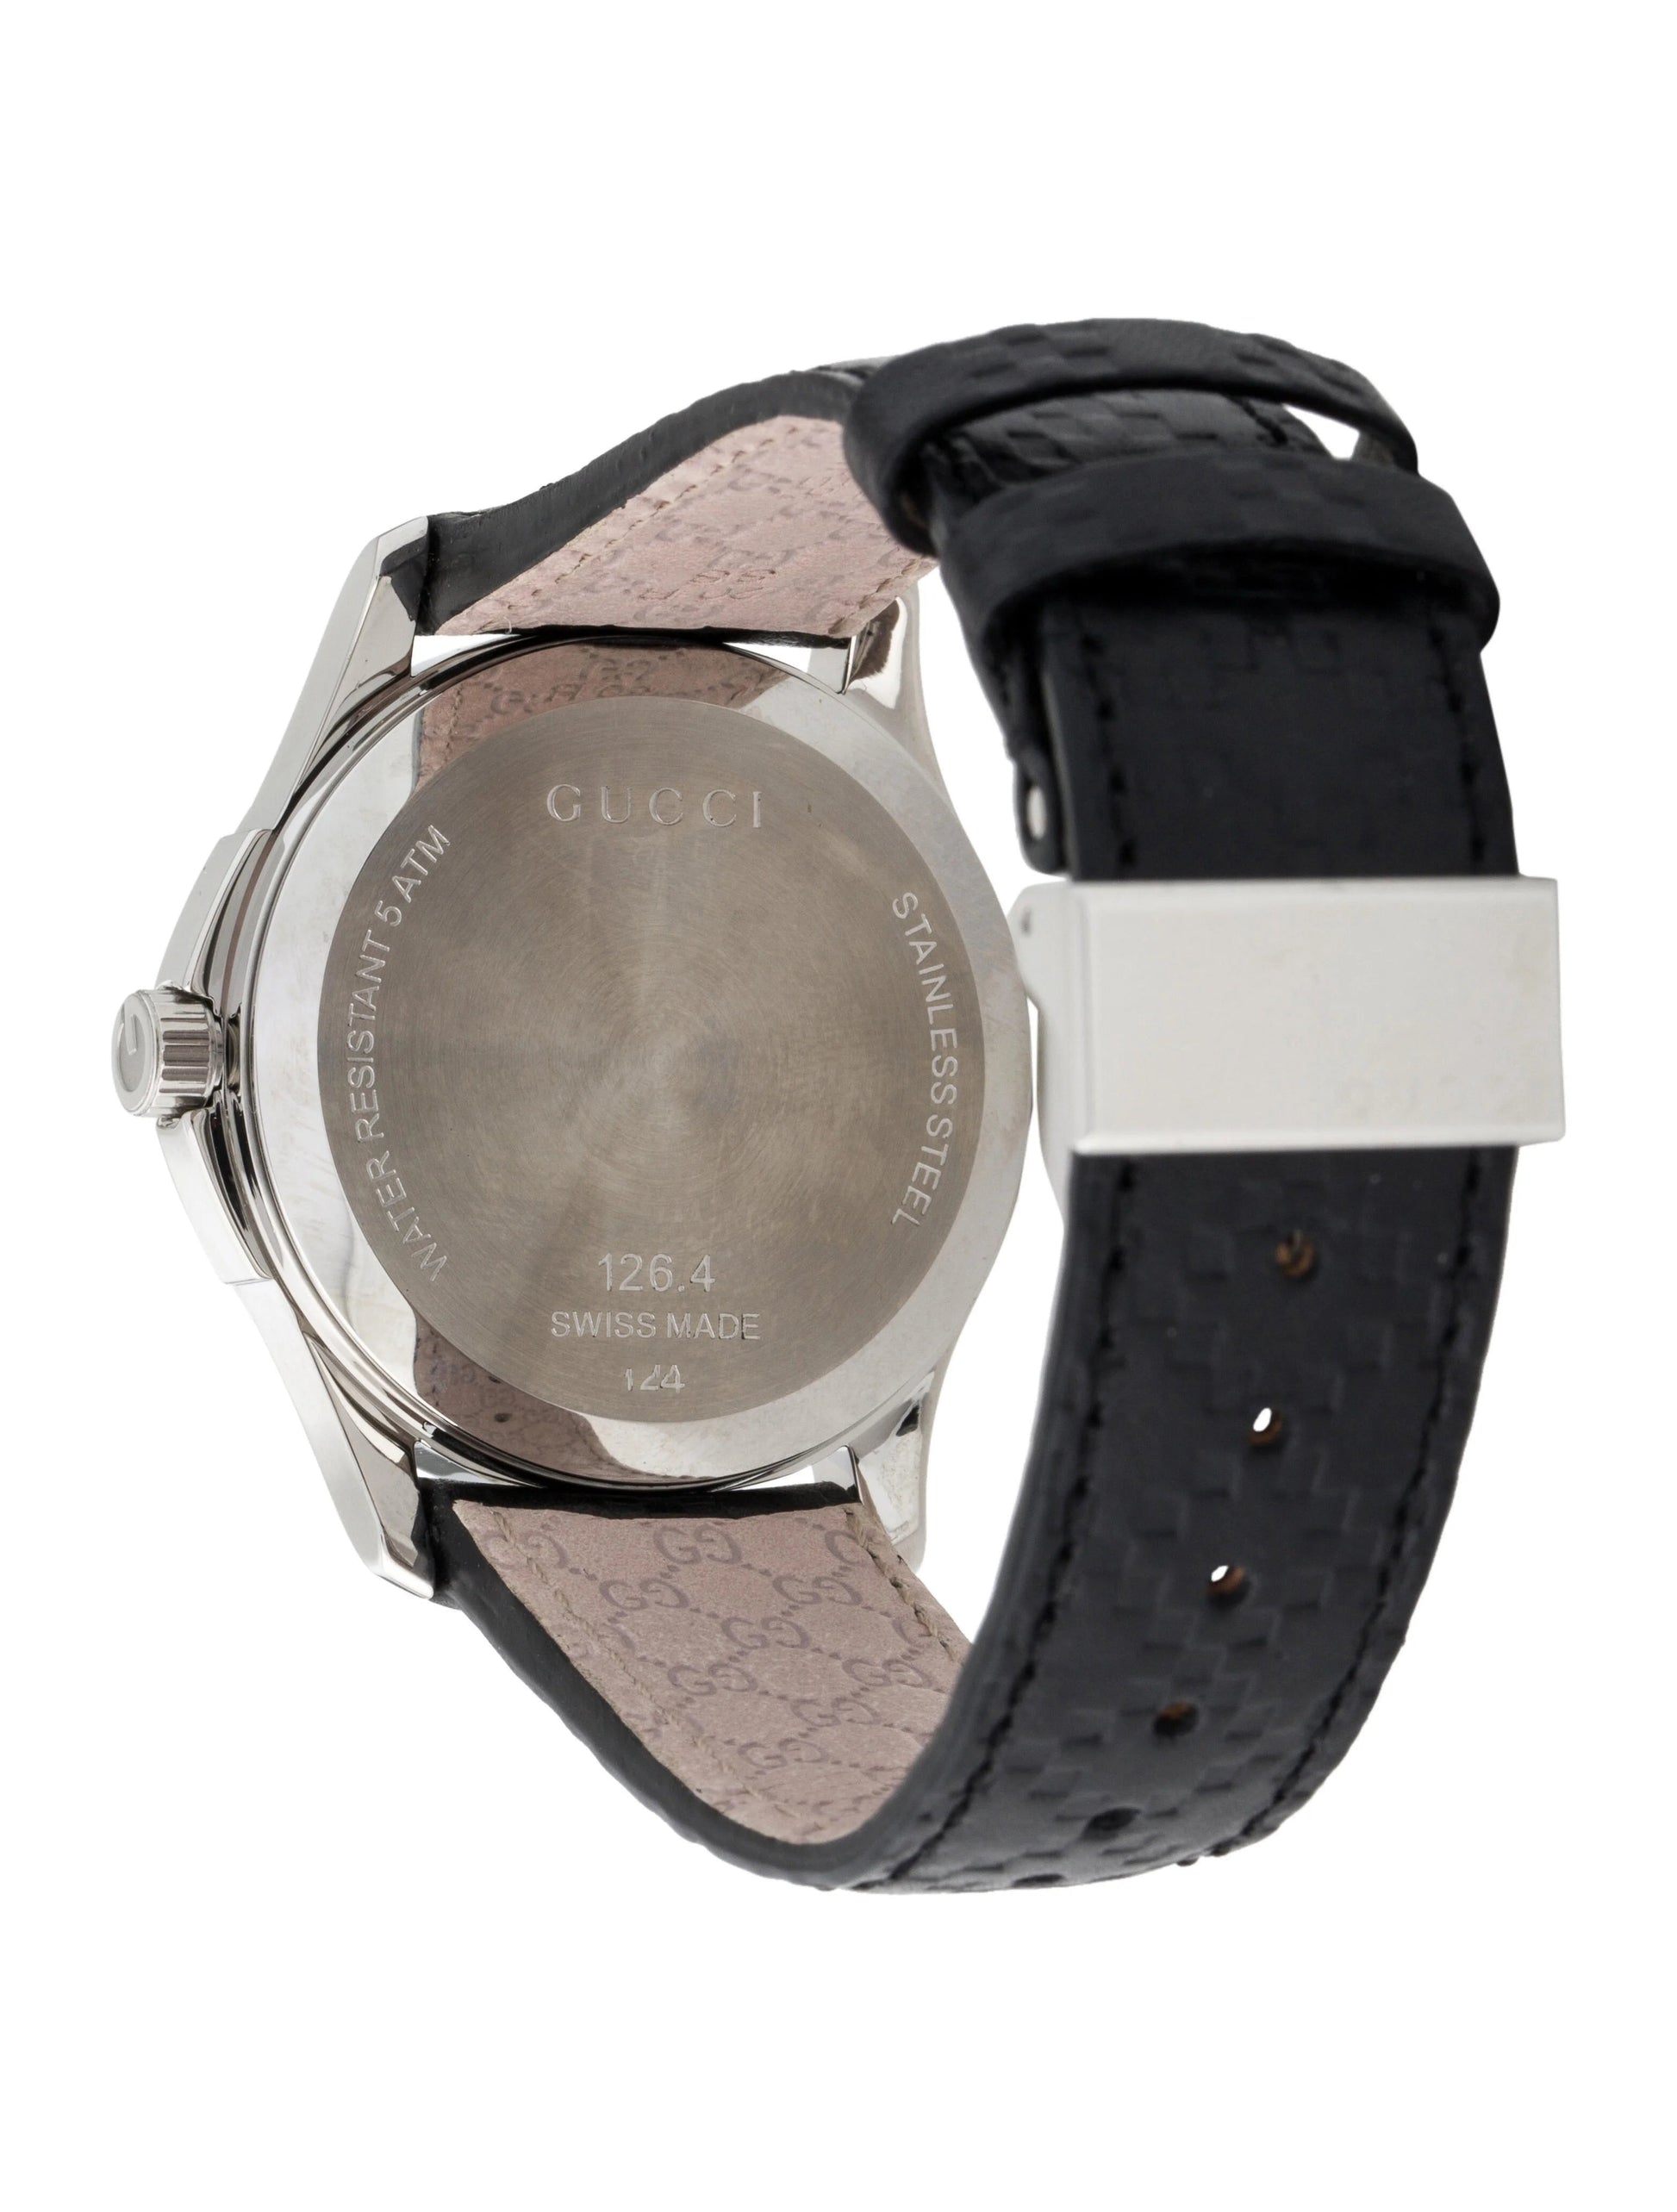 Gucci G Timeless Quartz Black Dial Black Leather Strap Watch for Men - YA126413